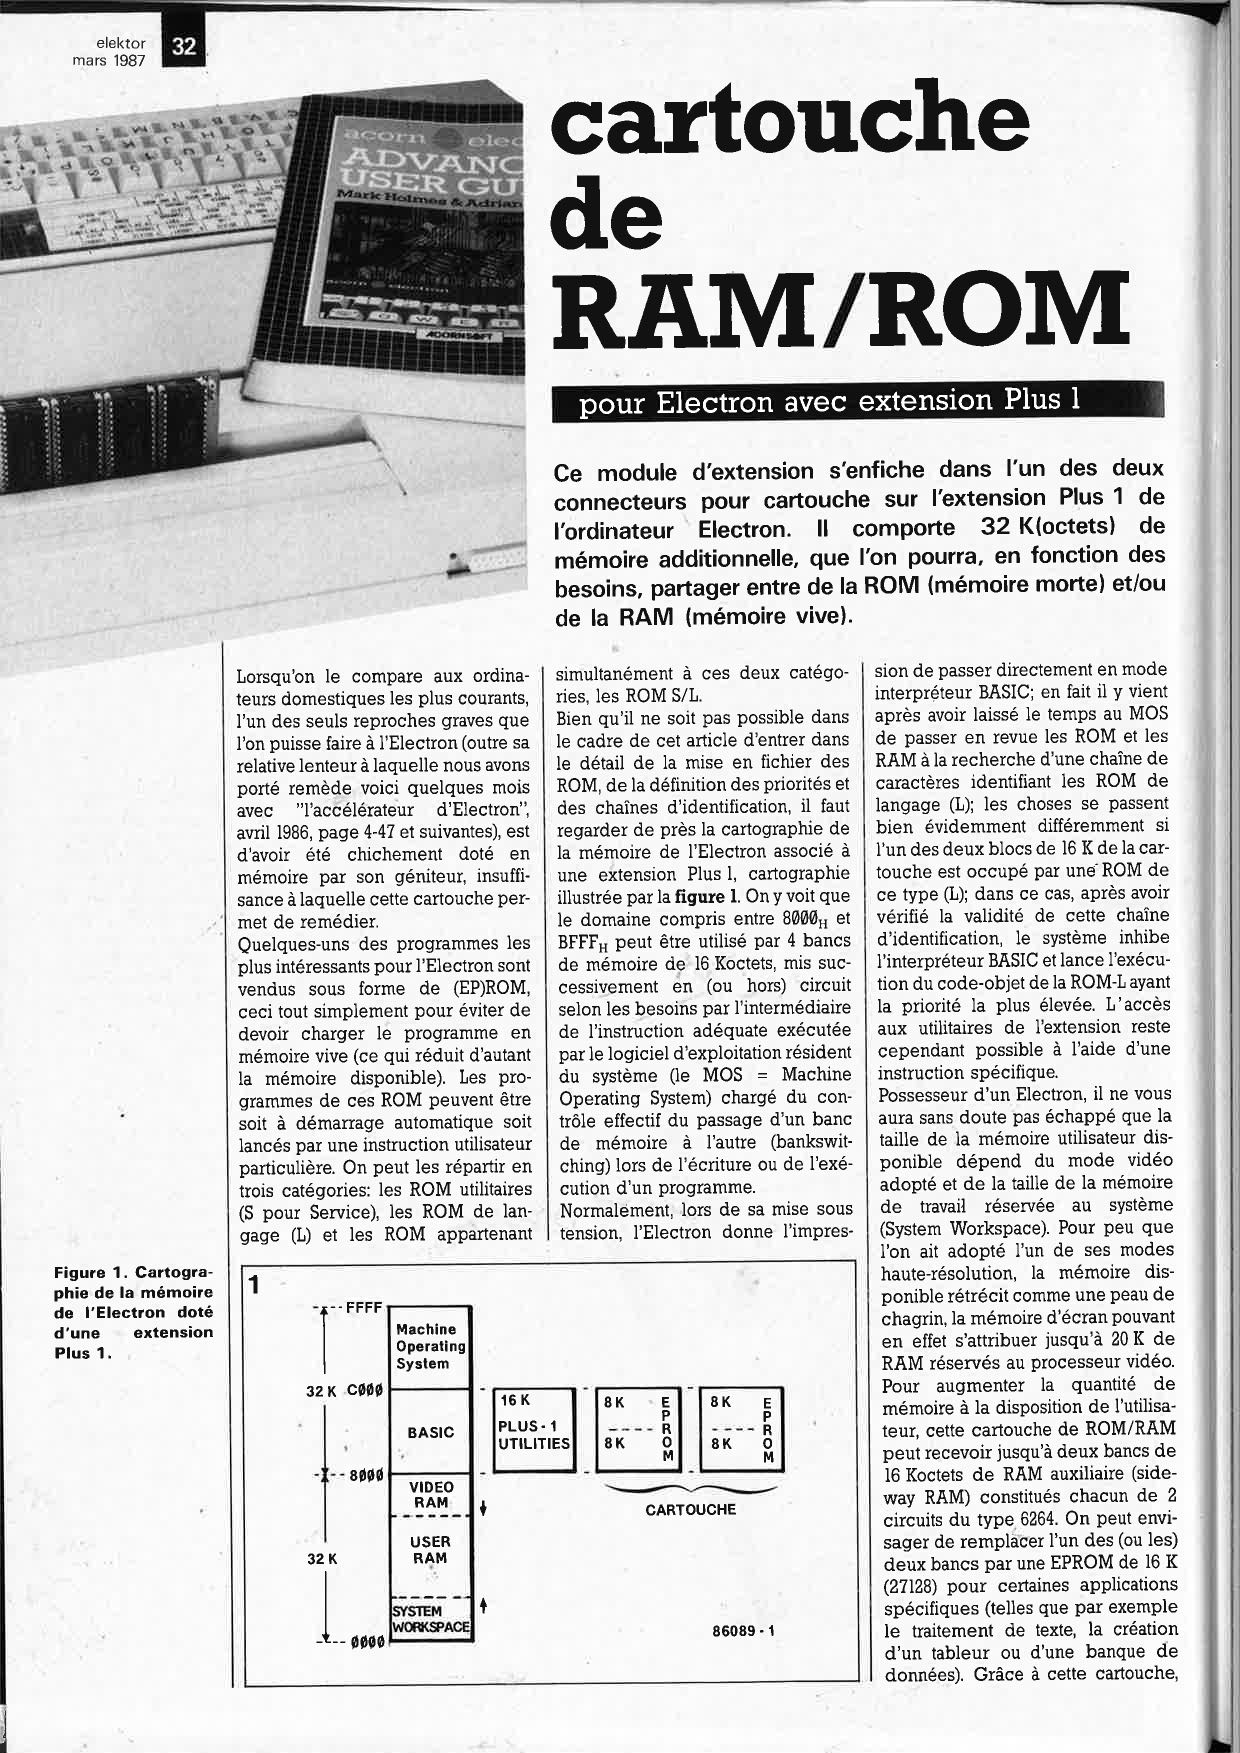 cartouche de RAM/ROM